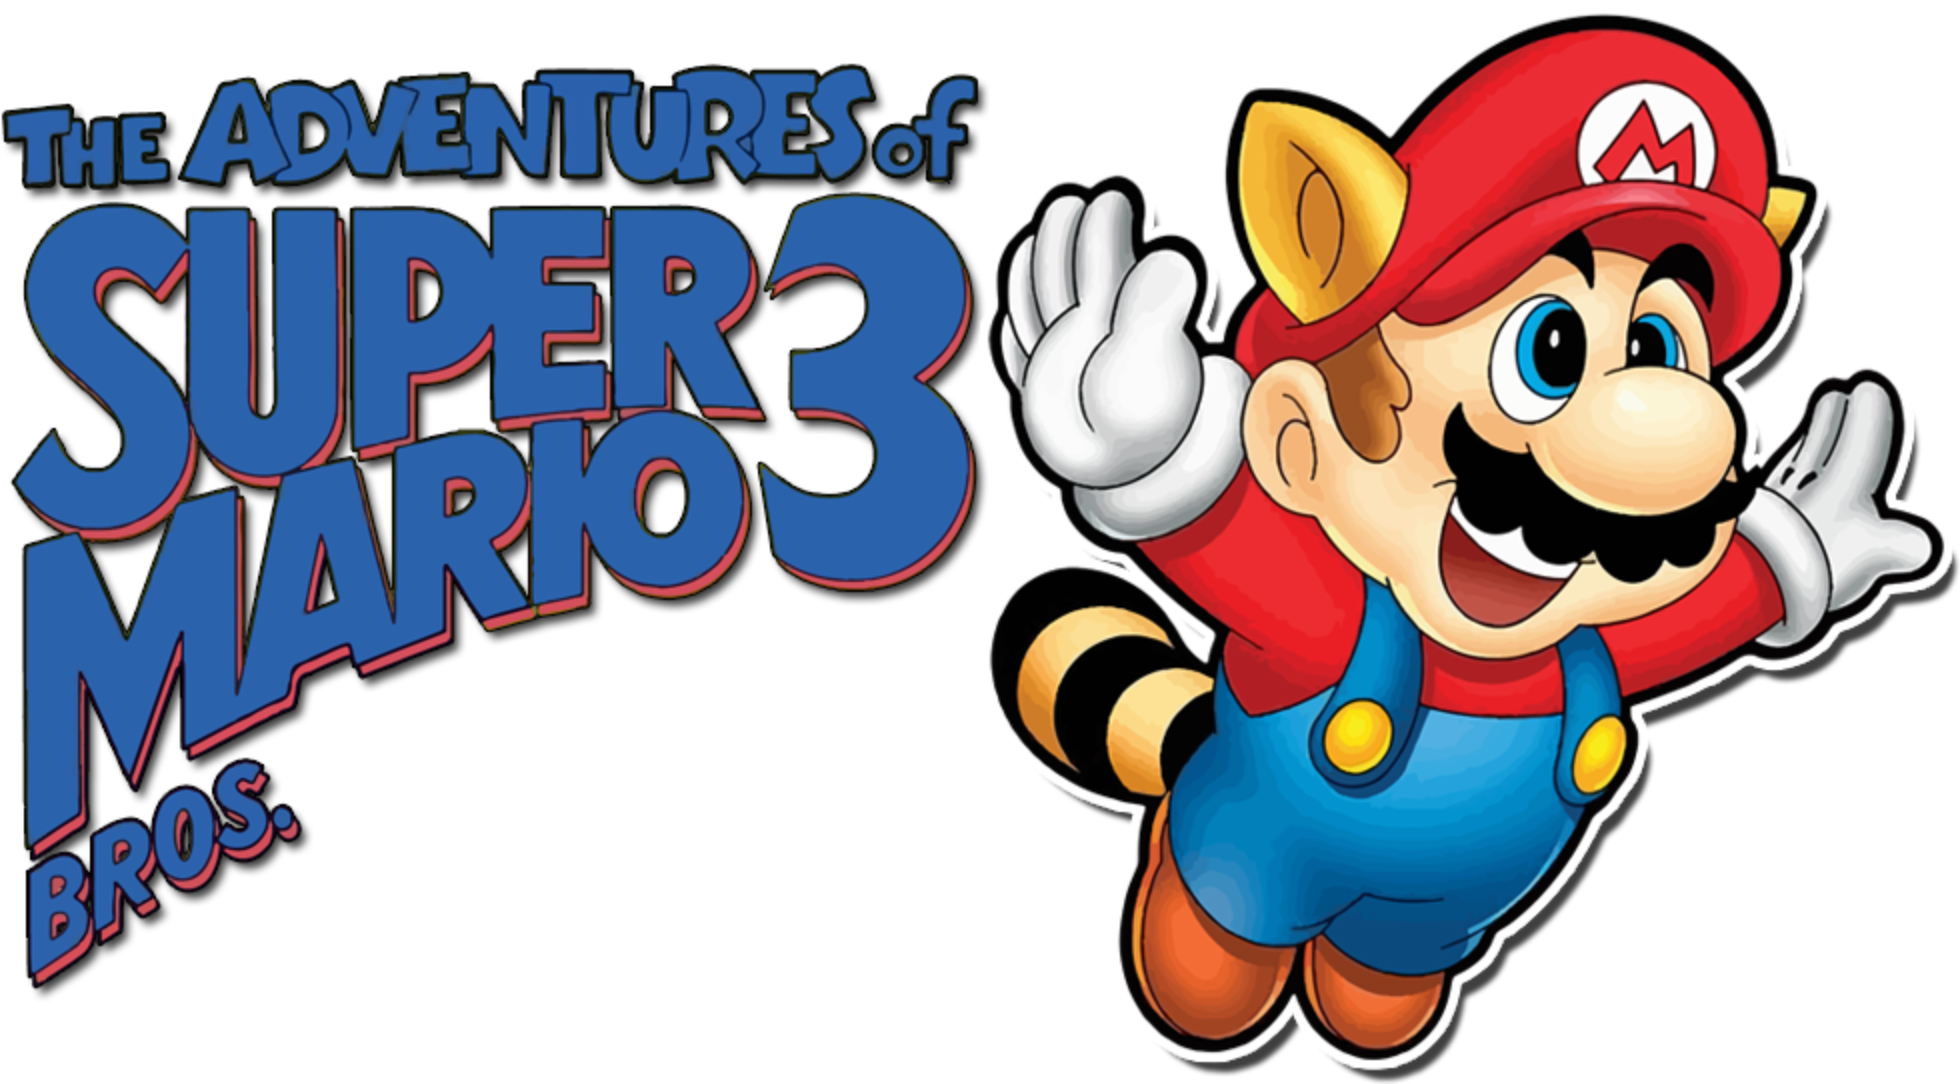 The Adventures of Super Mario Bros. 3 